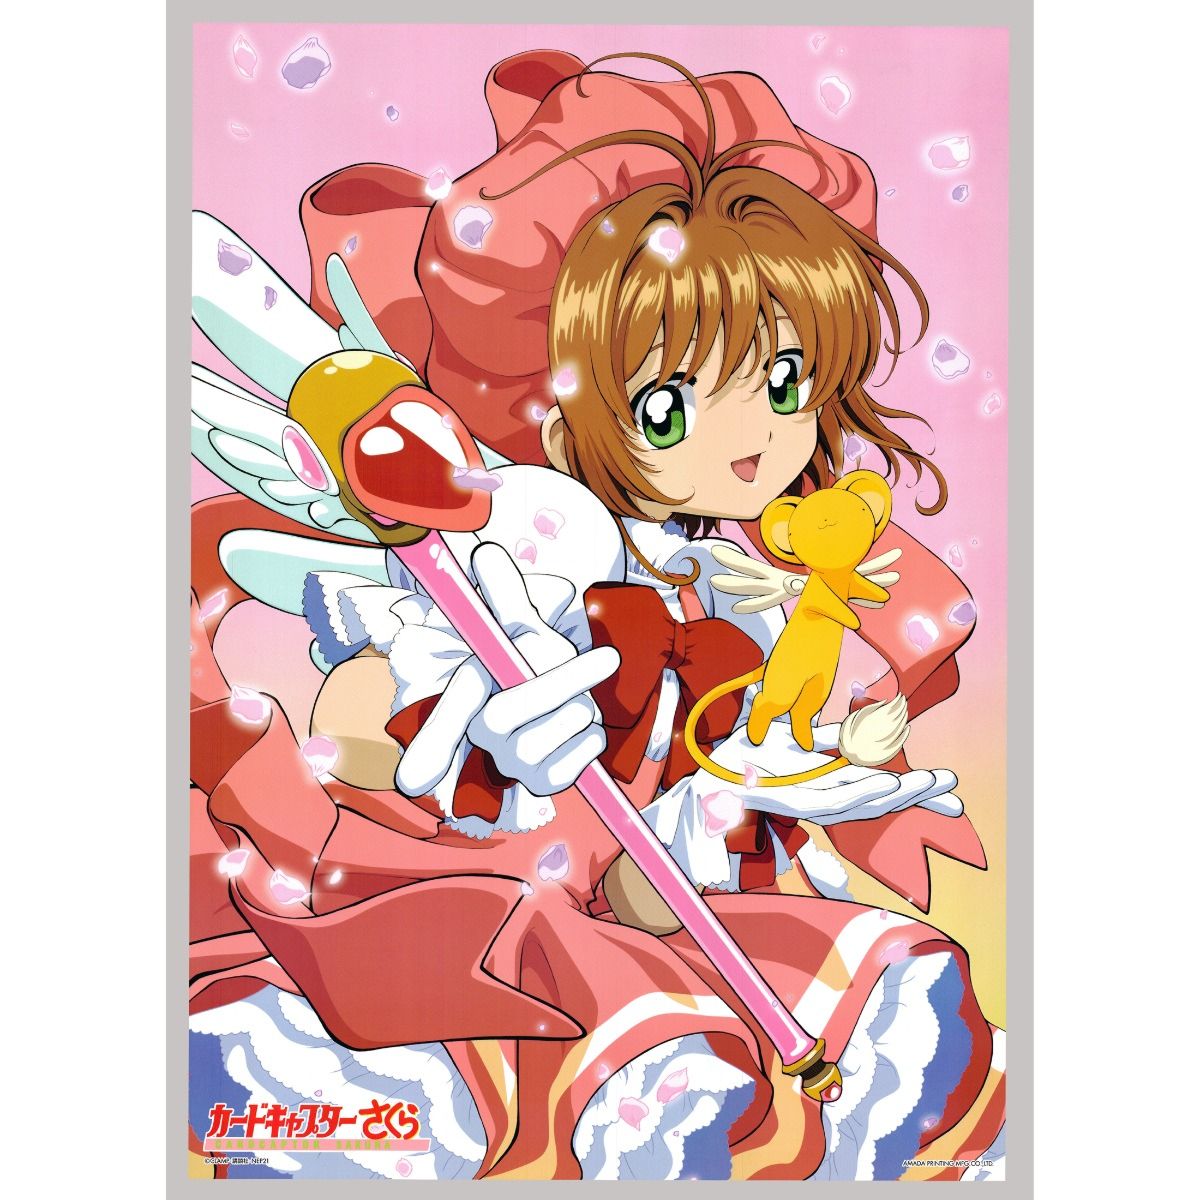 Buy Original Cardcaptor Sakura Anime Poster Online